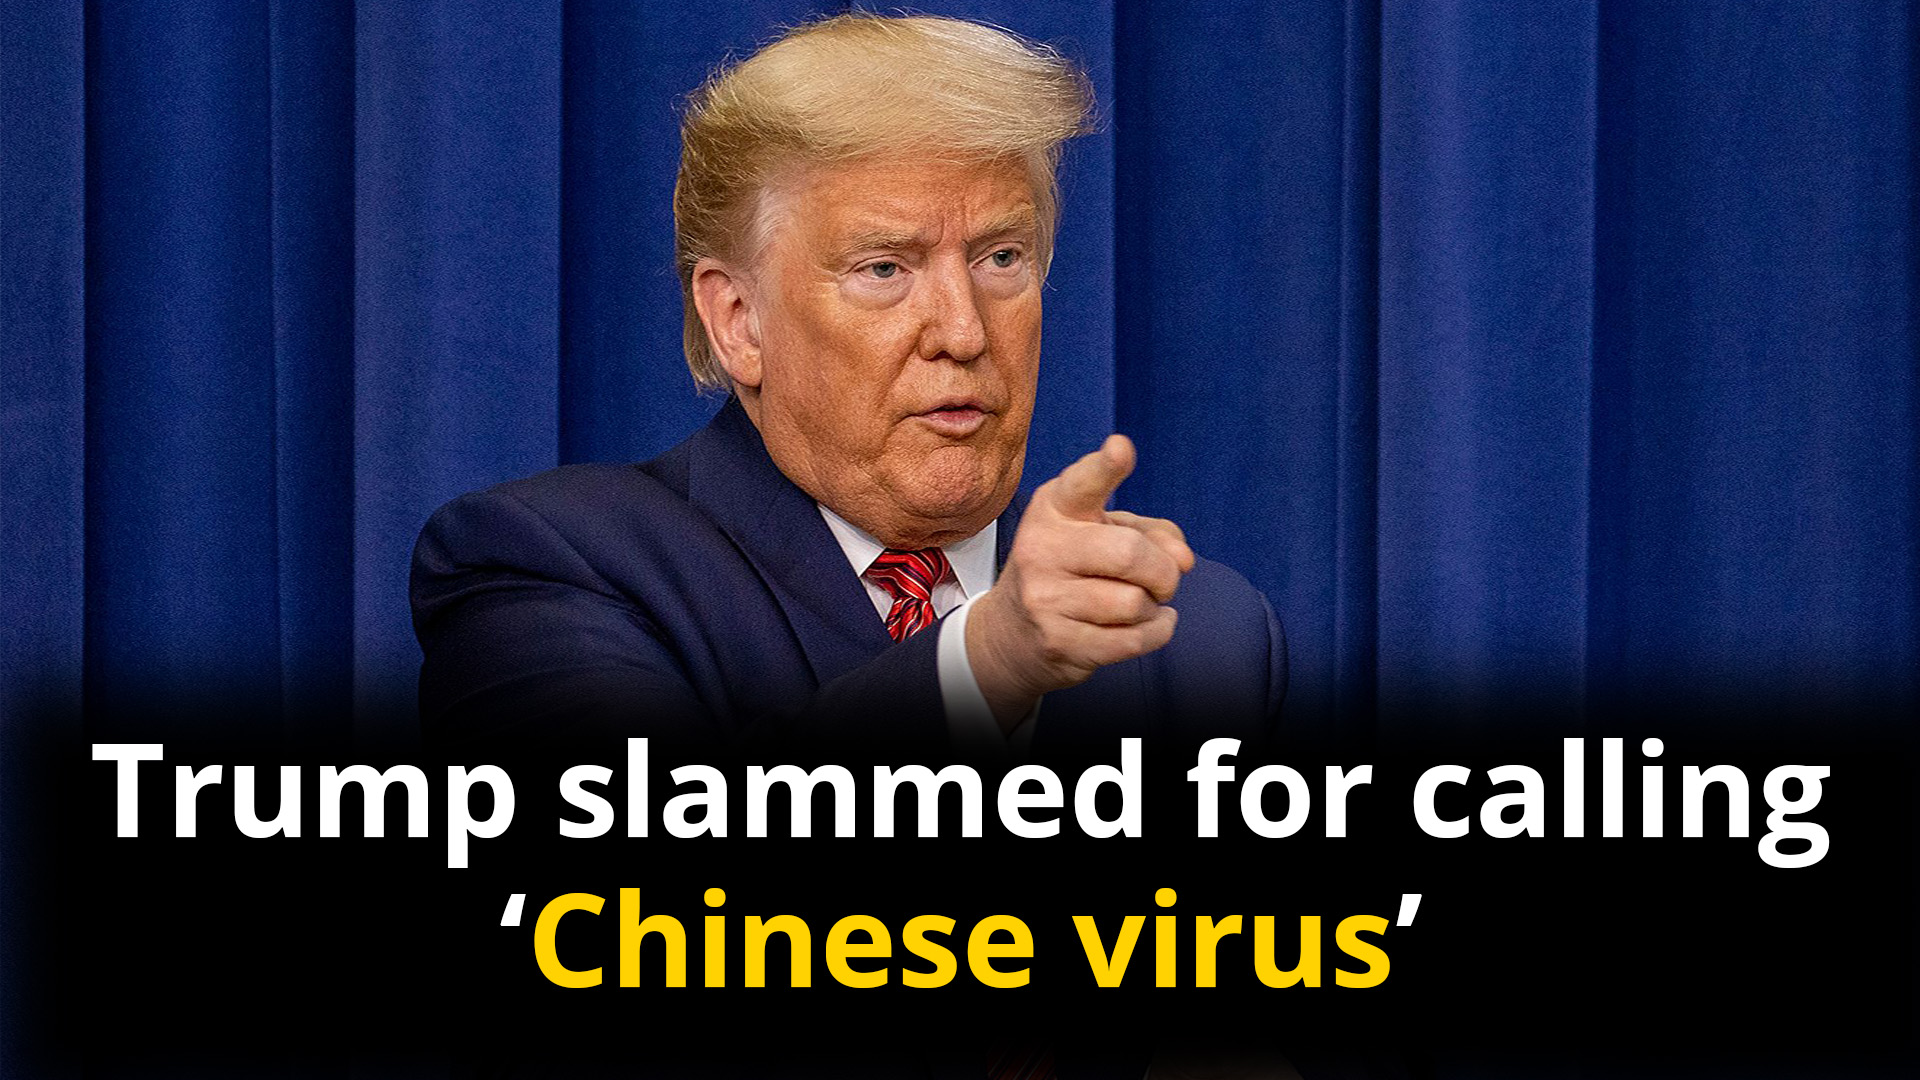 Trump calling coronavirus Chinese virus can lead to racial profiling